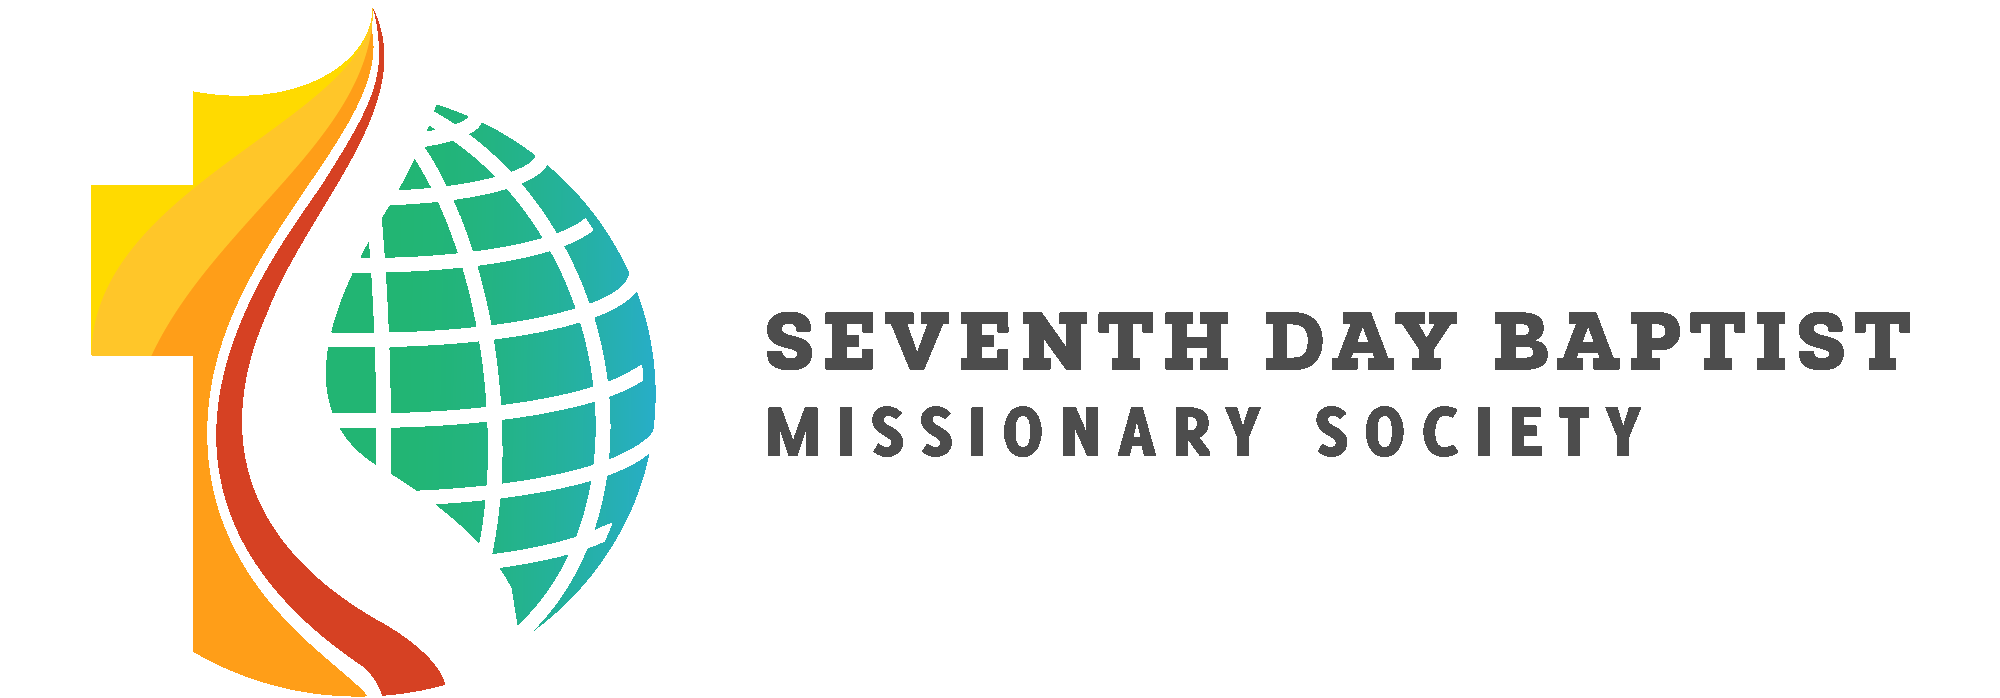 Seventh Day Baptist Missionary Society